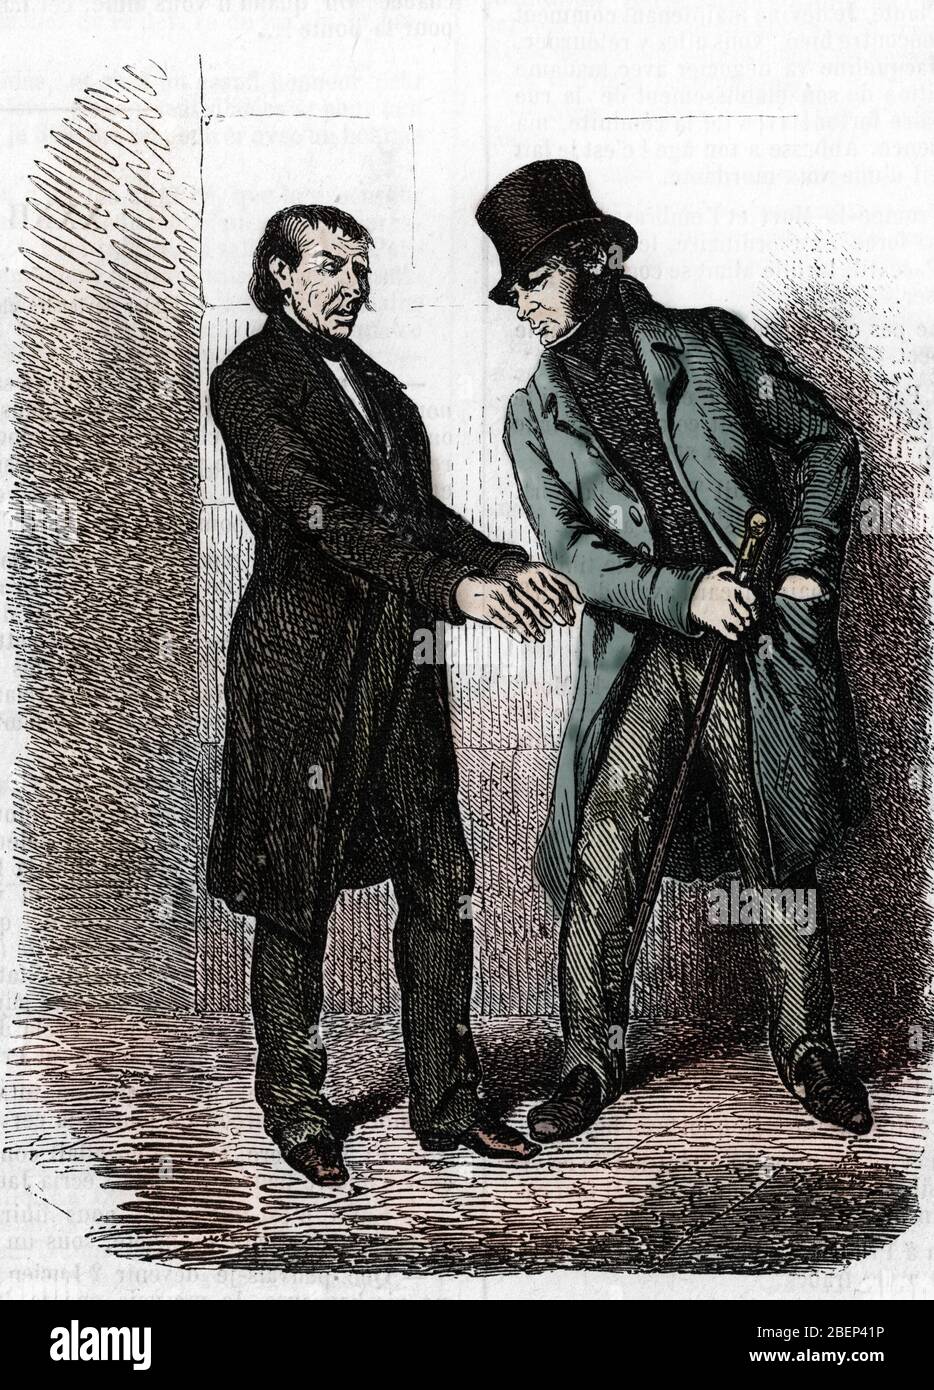 Portrait de Bibi-Lupin et Vautrin in "La derniere reincarnation de Vautrin"  in "Splendeurs et miseres des courtisanes" de Honore de Balzac (1799-1850  Stock Photo - Alamy